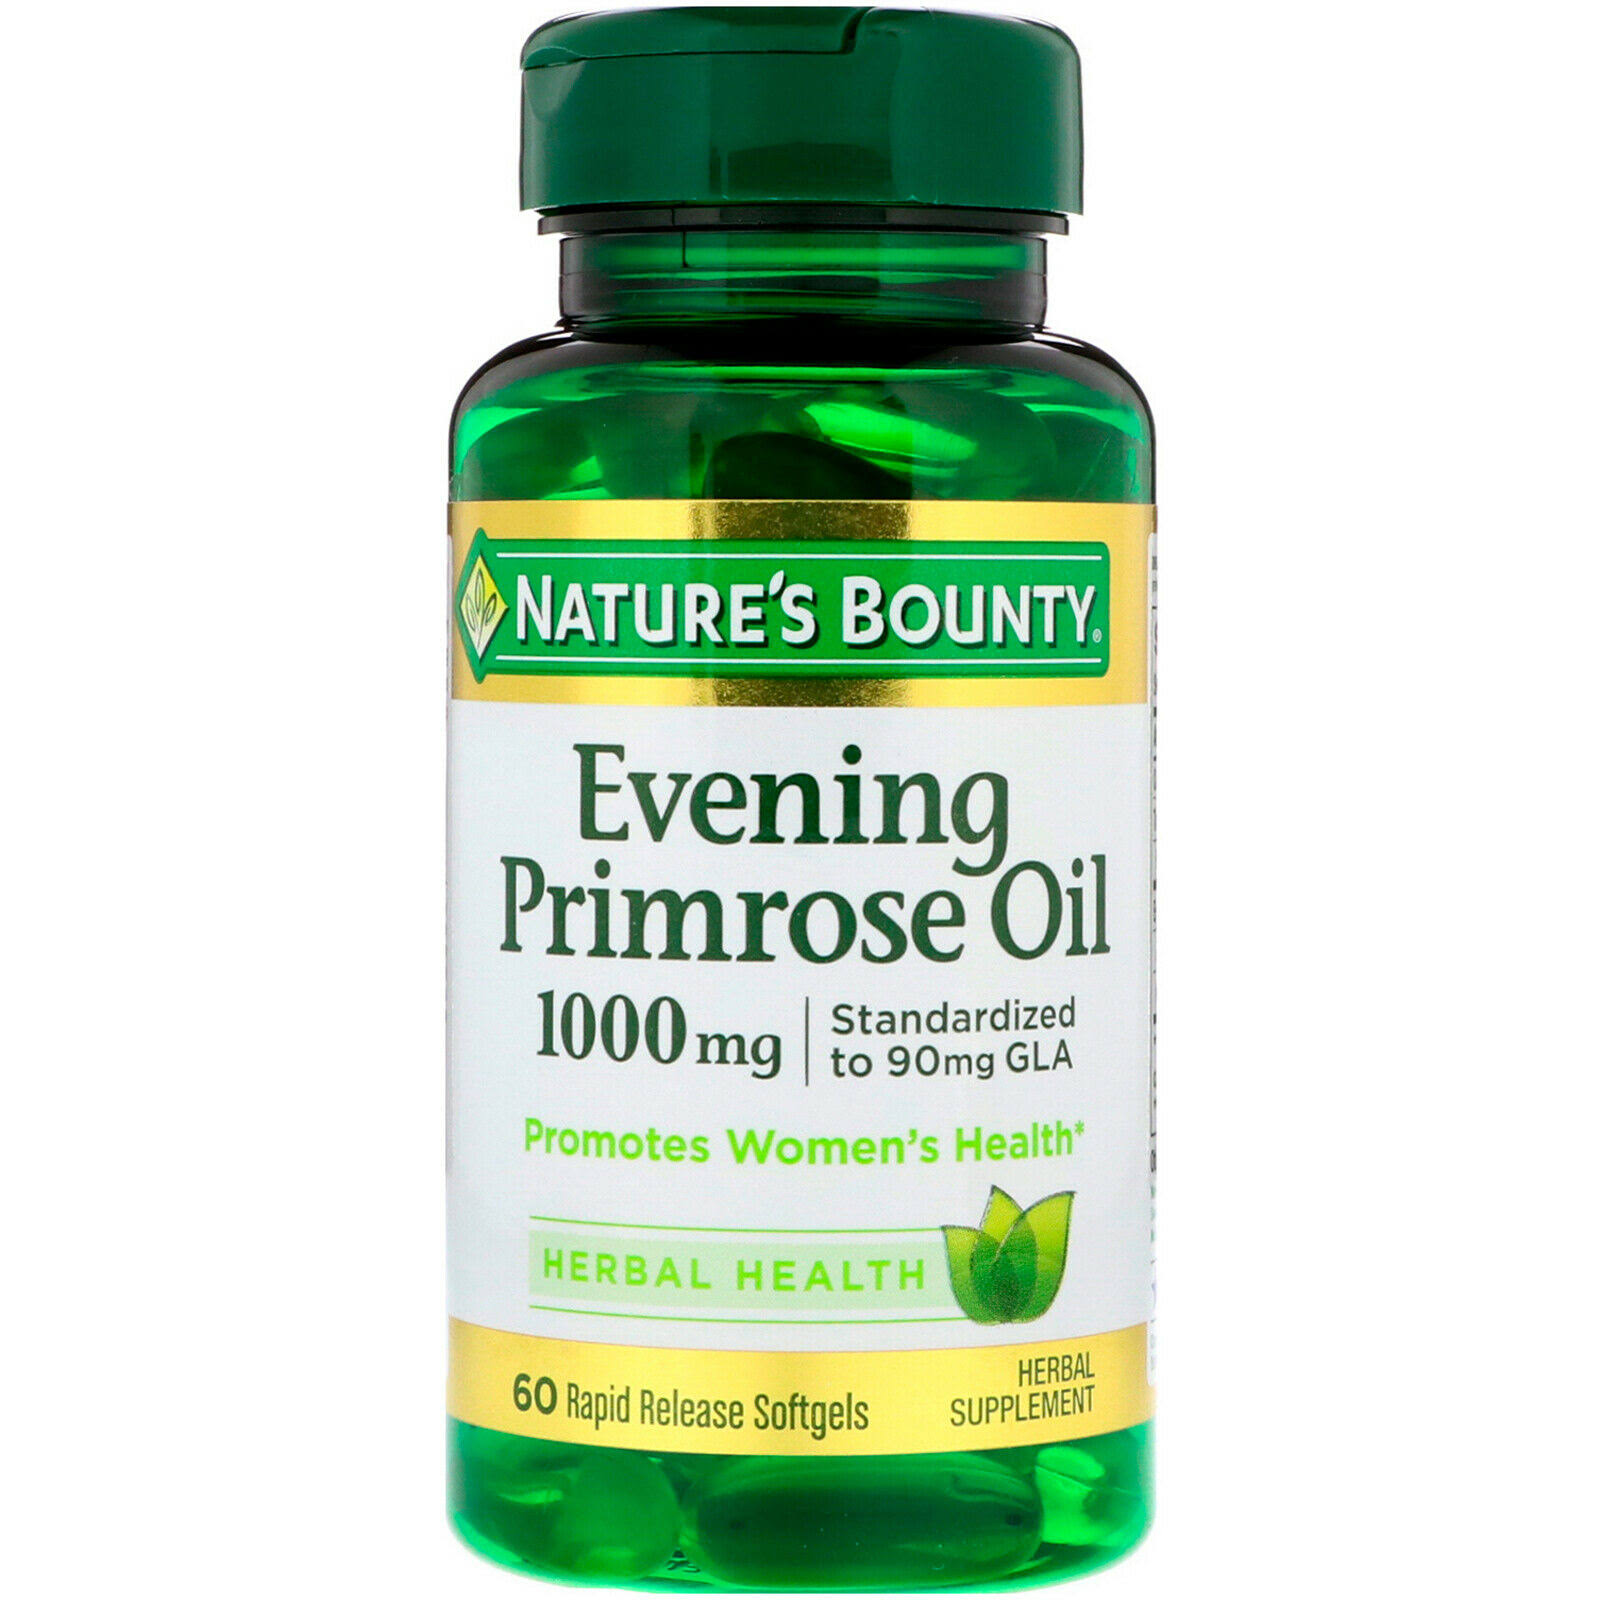 Nature's Bounty Evening Primrose Oil Herbal Supplement - 60 Softgels